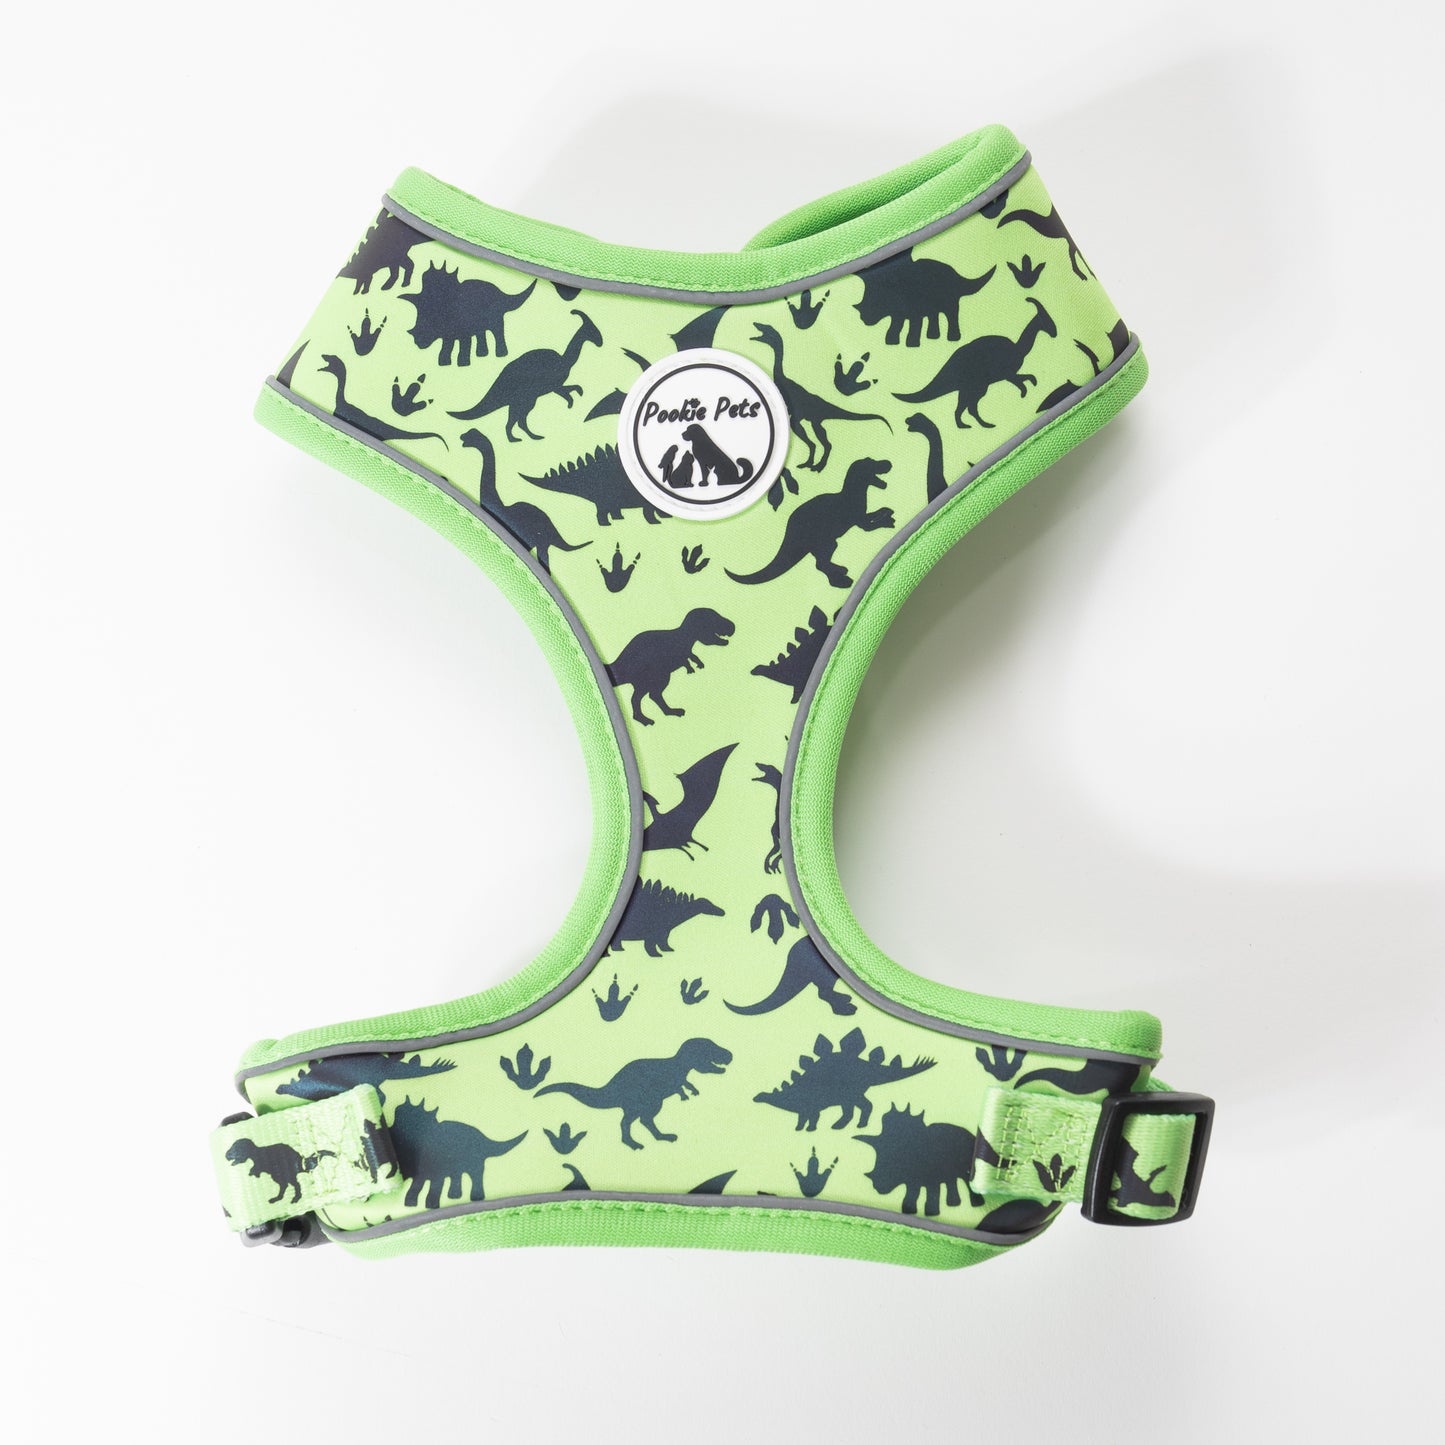 Dinosaur-themed Reflective Adjustable Comfort Harness - Pookie Pets